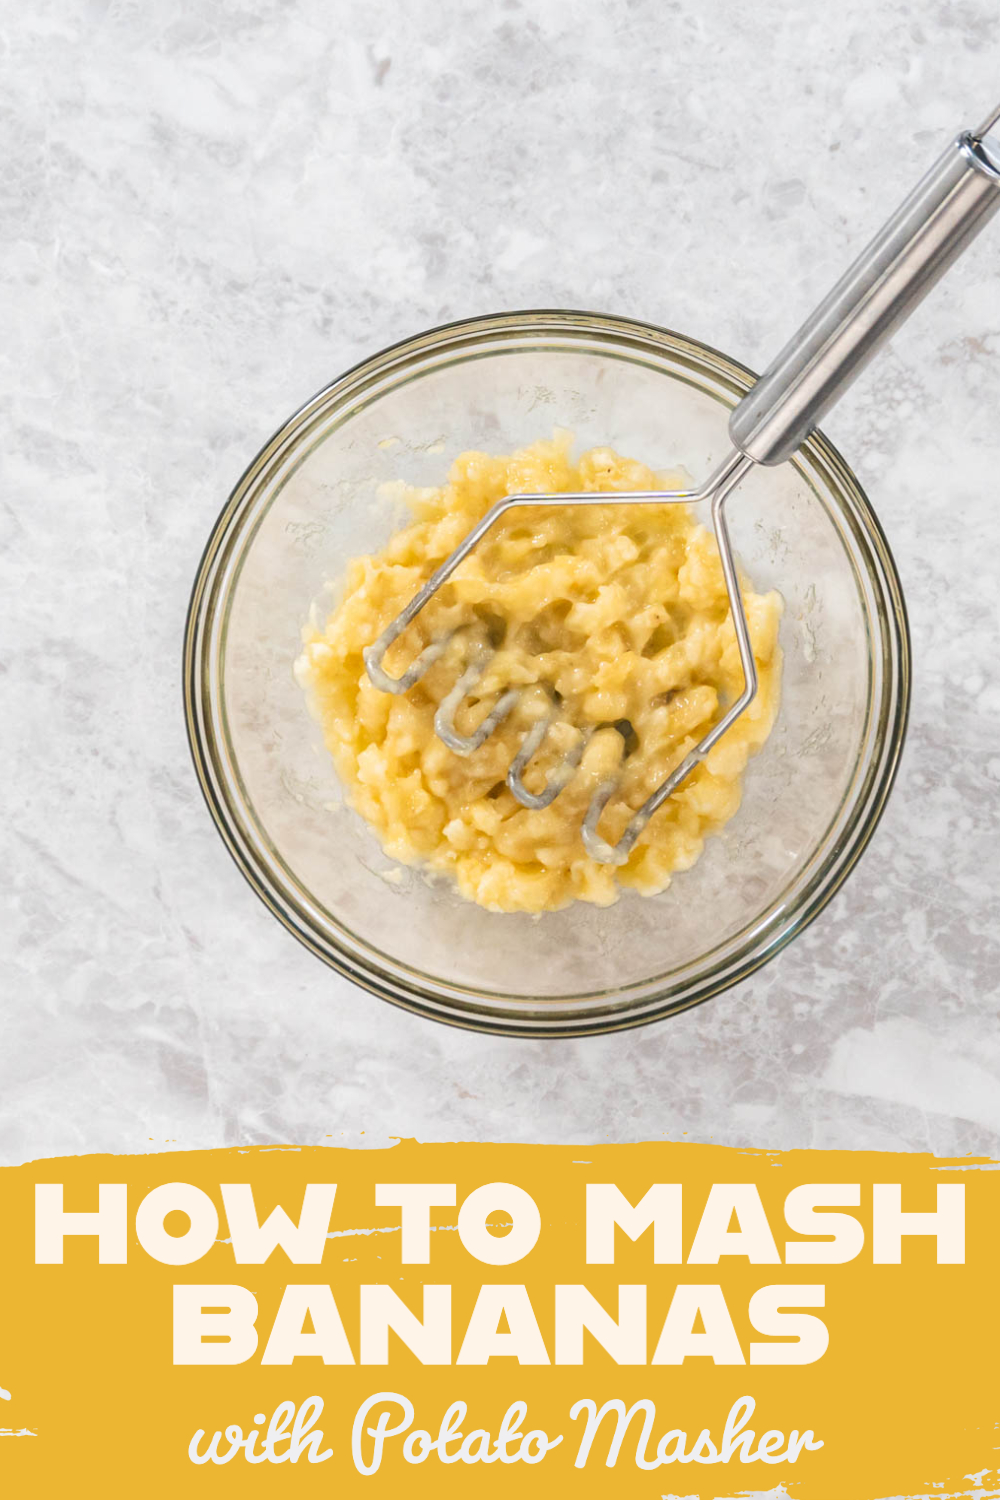 How to Mash Bananas with Potato Masher